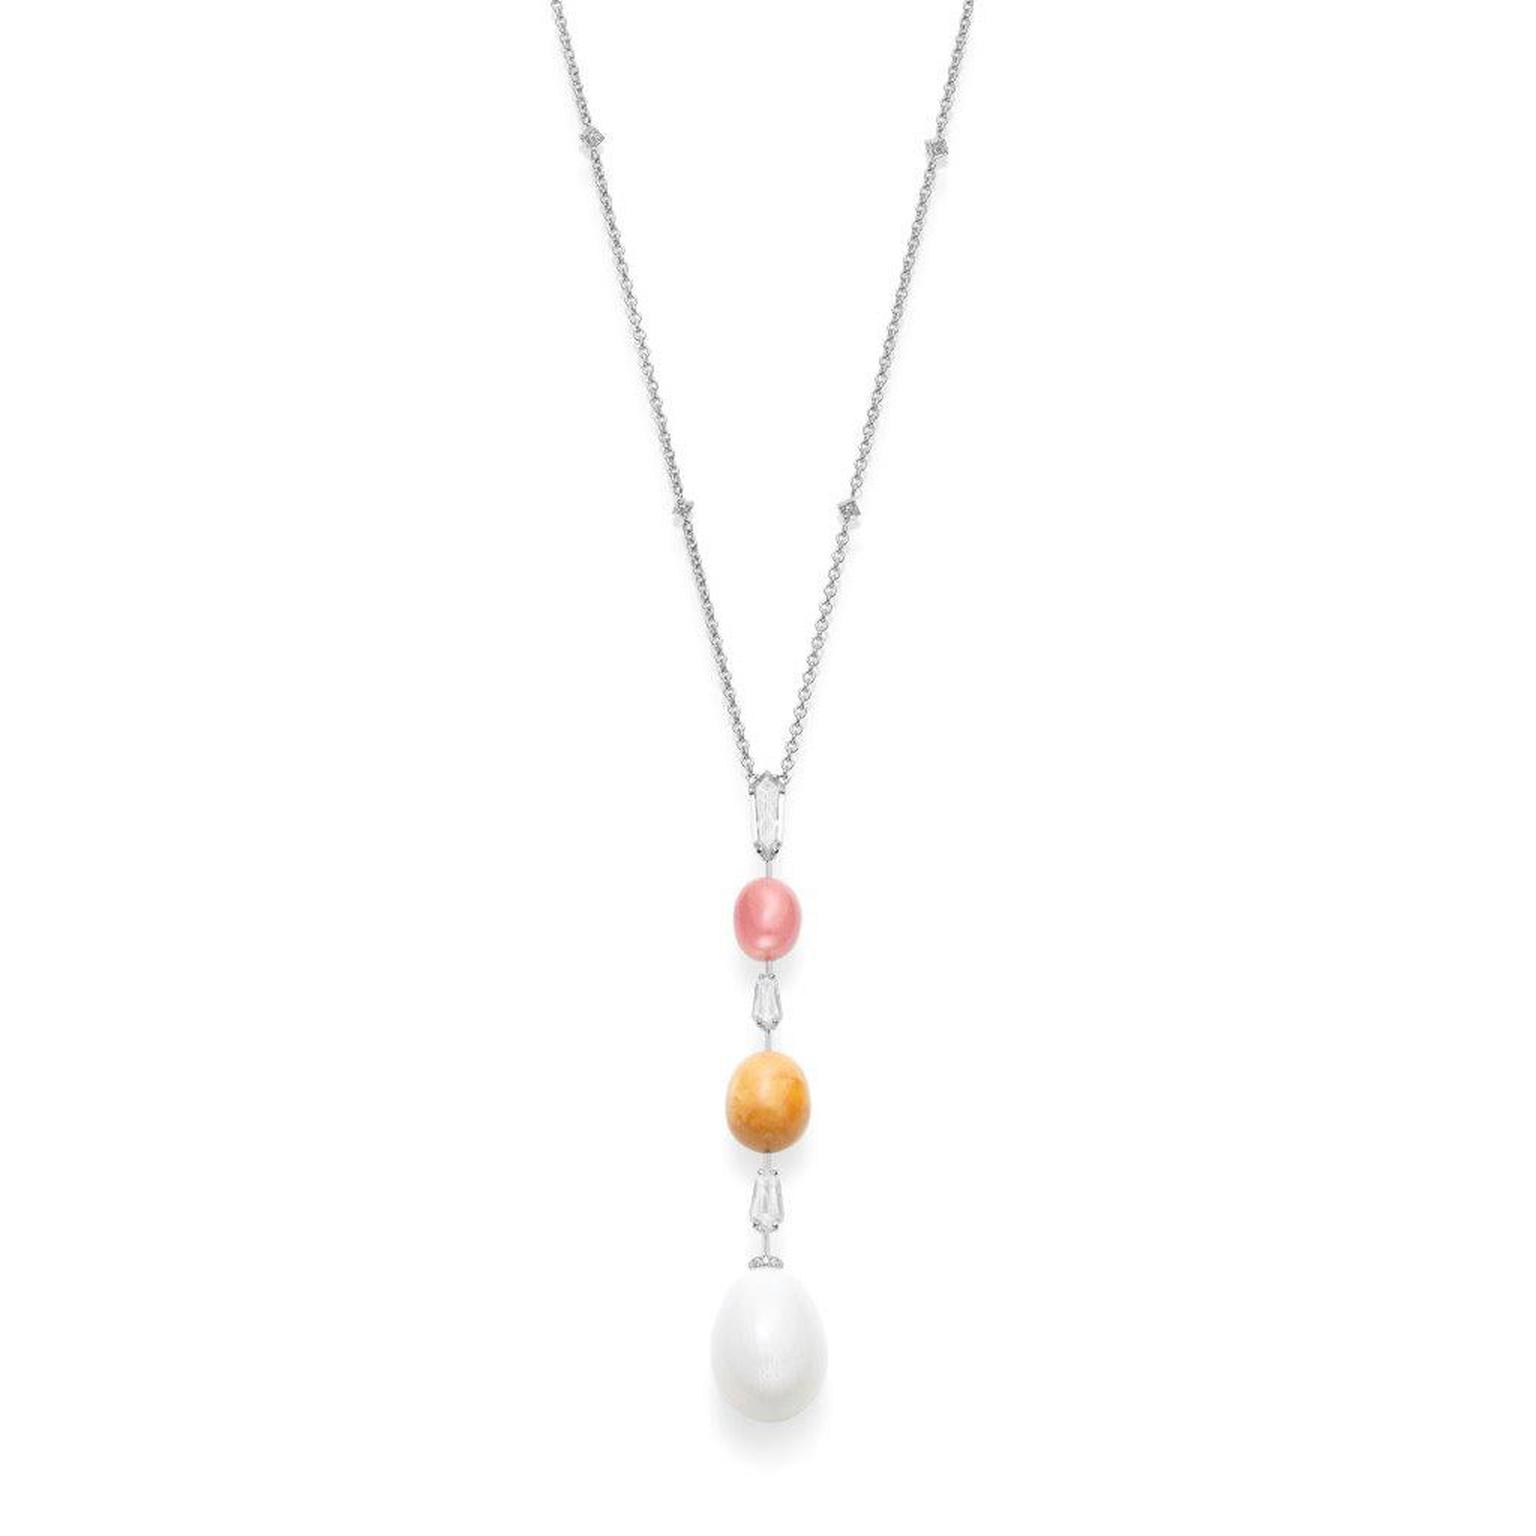 Mikimoto rare natural pearl pendant